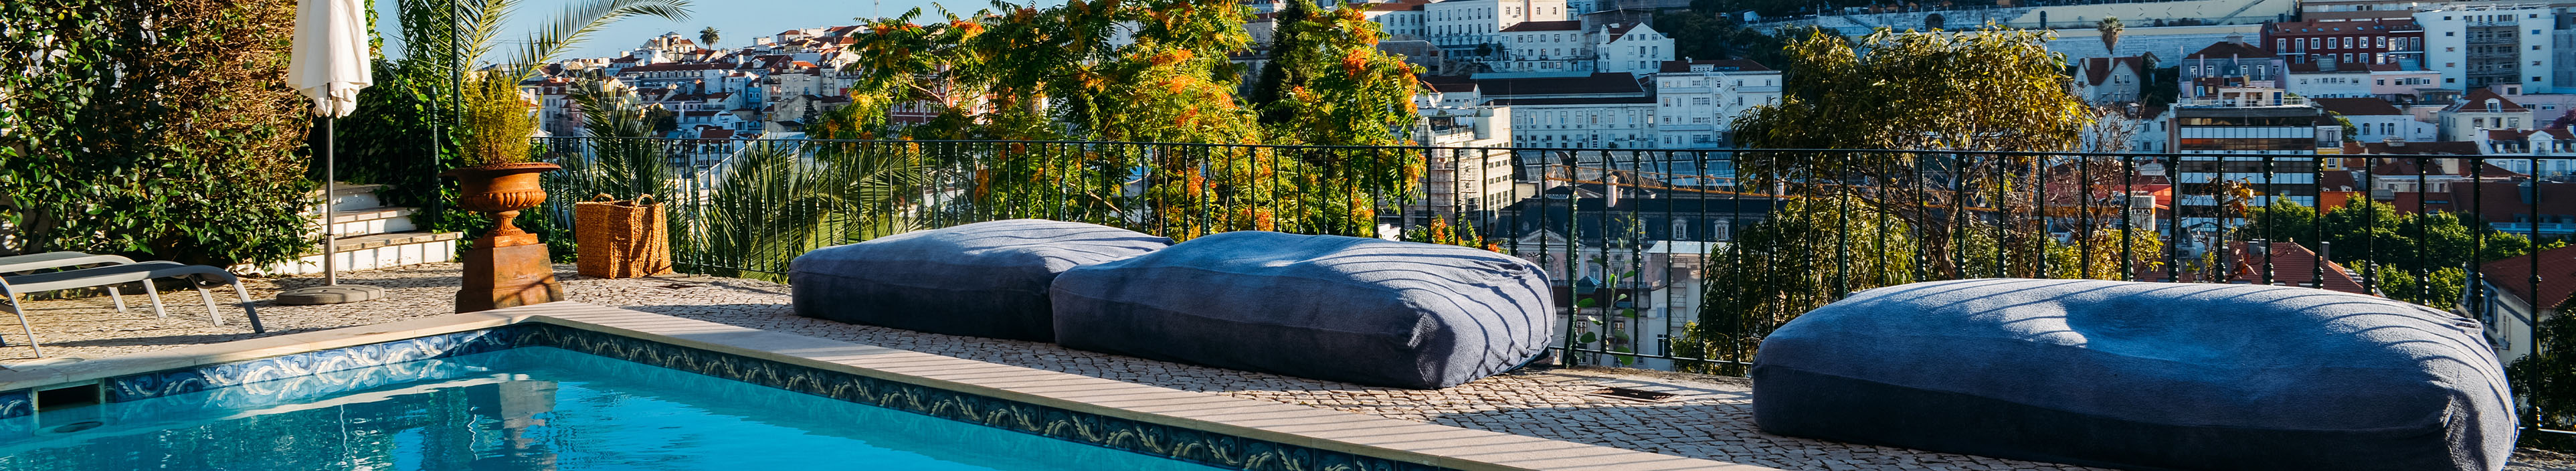 Hotel mit Pool in Lissabon, Portugal